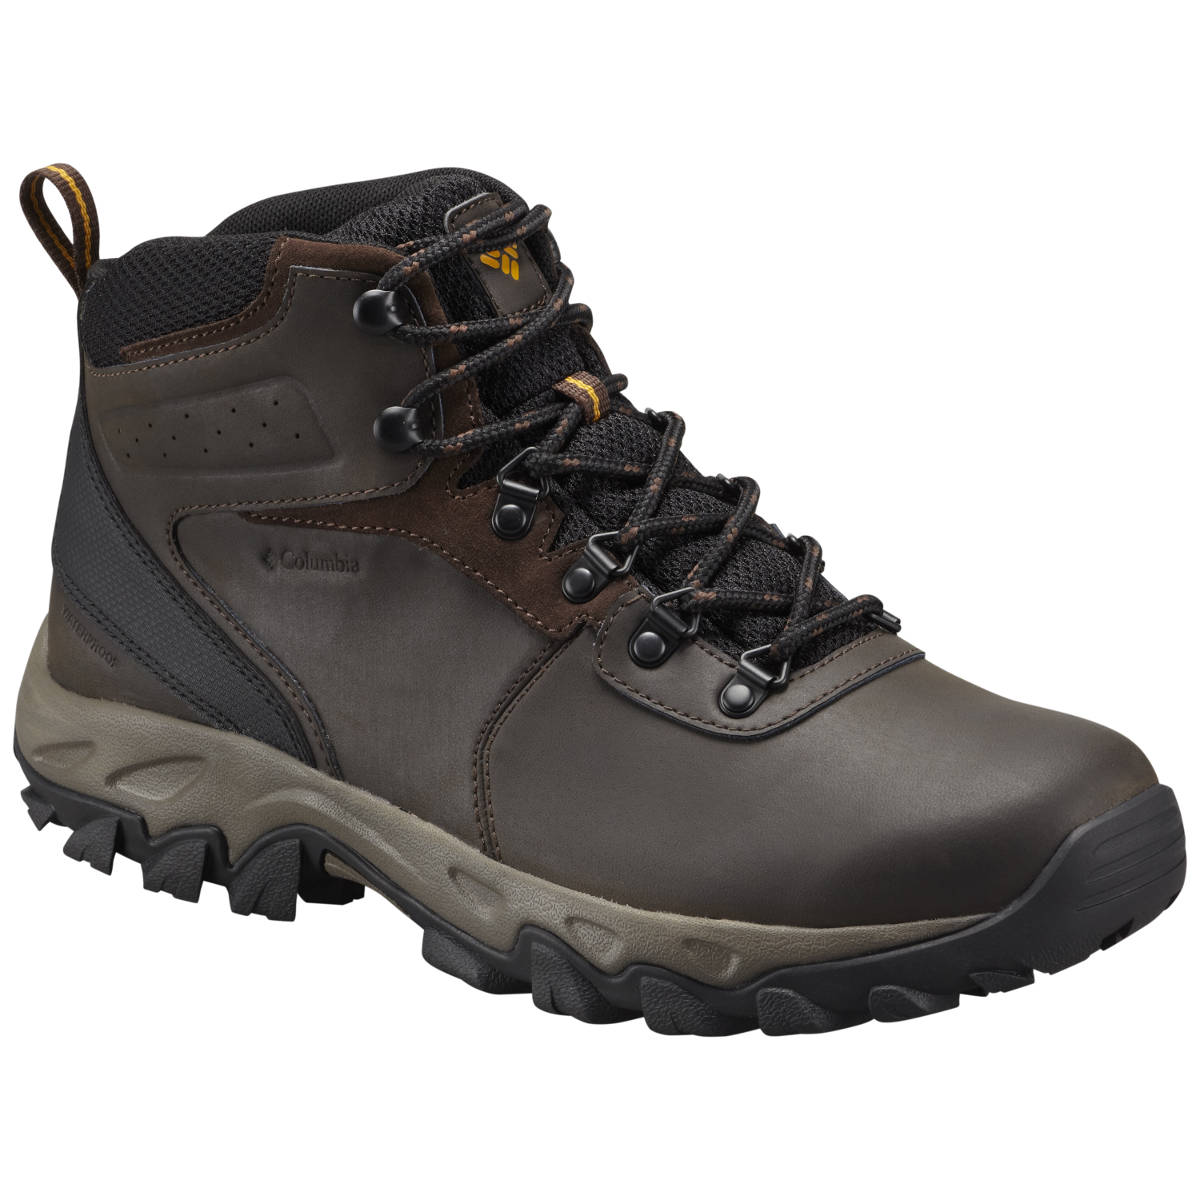 Columbia Men's Newton Ridge Plus Ii Waterproof Hiking Boots - Size 9